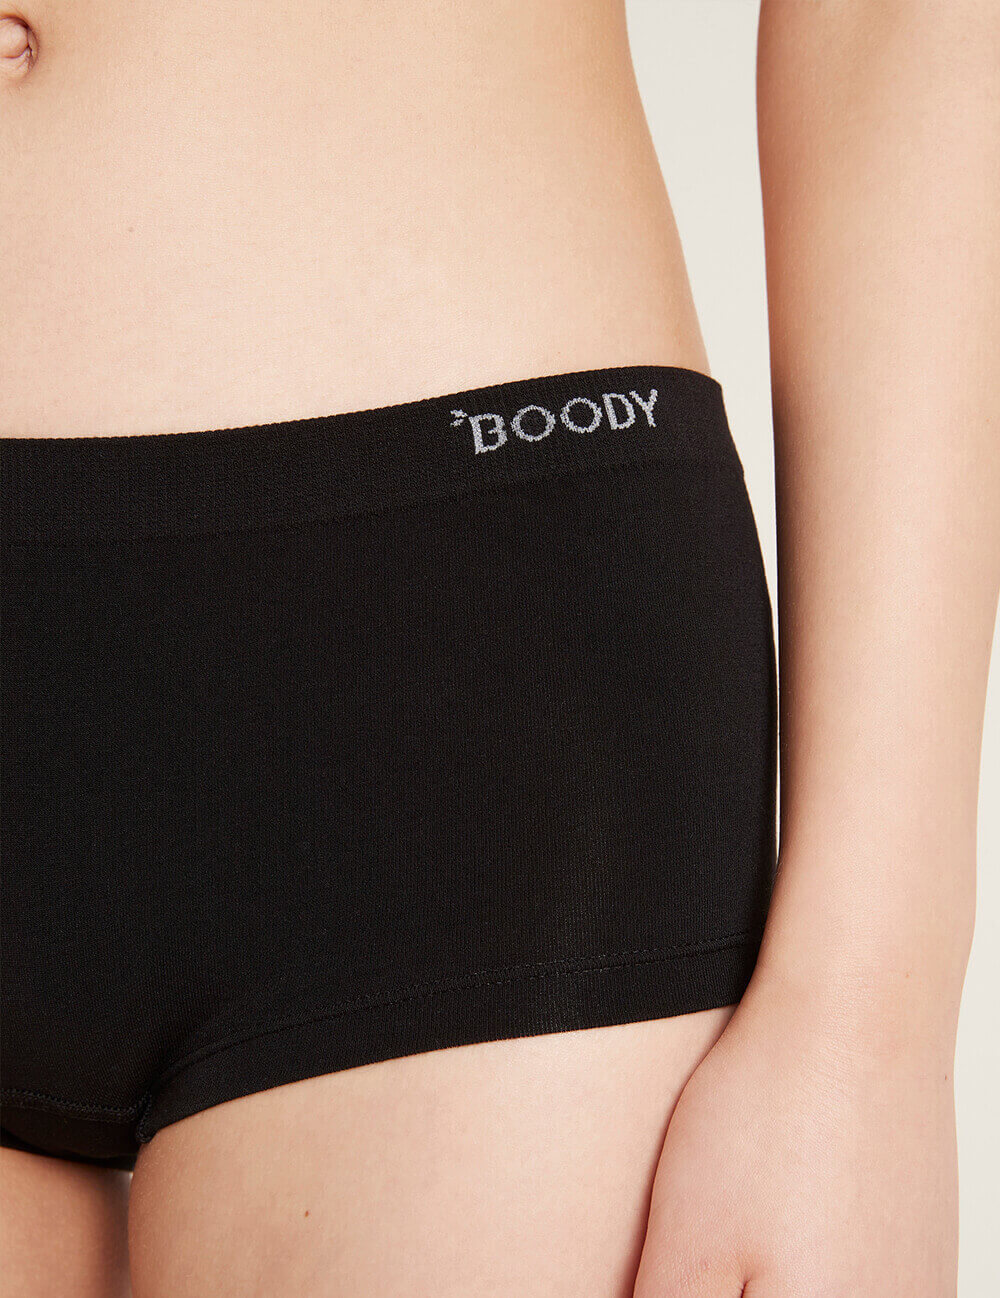 Boody Bamboo Boyleg Brief Boy Short Womens Underwear in Black Close Up